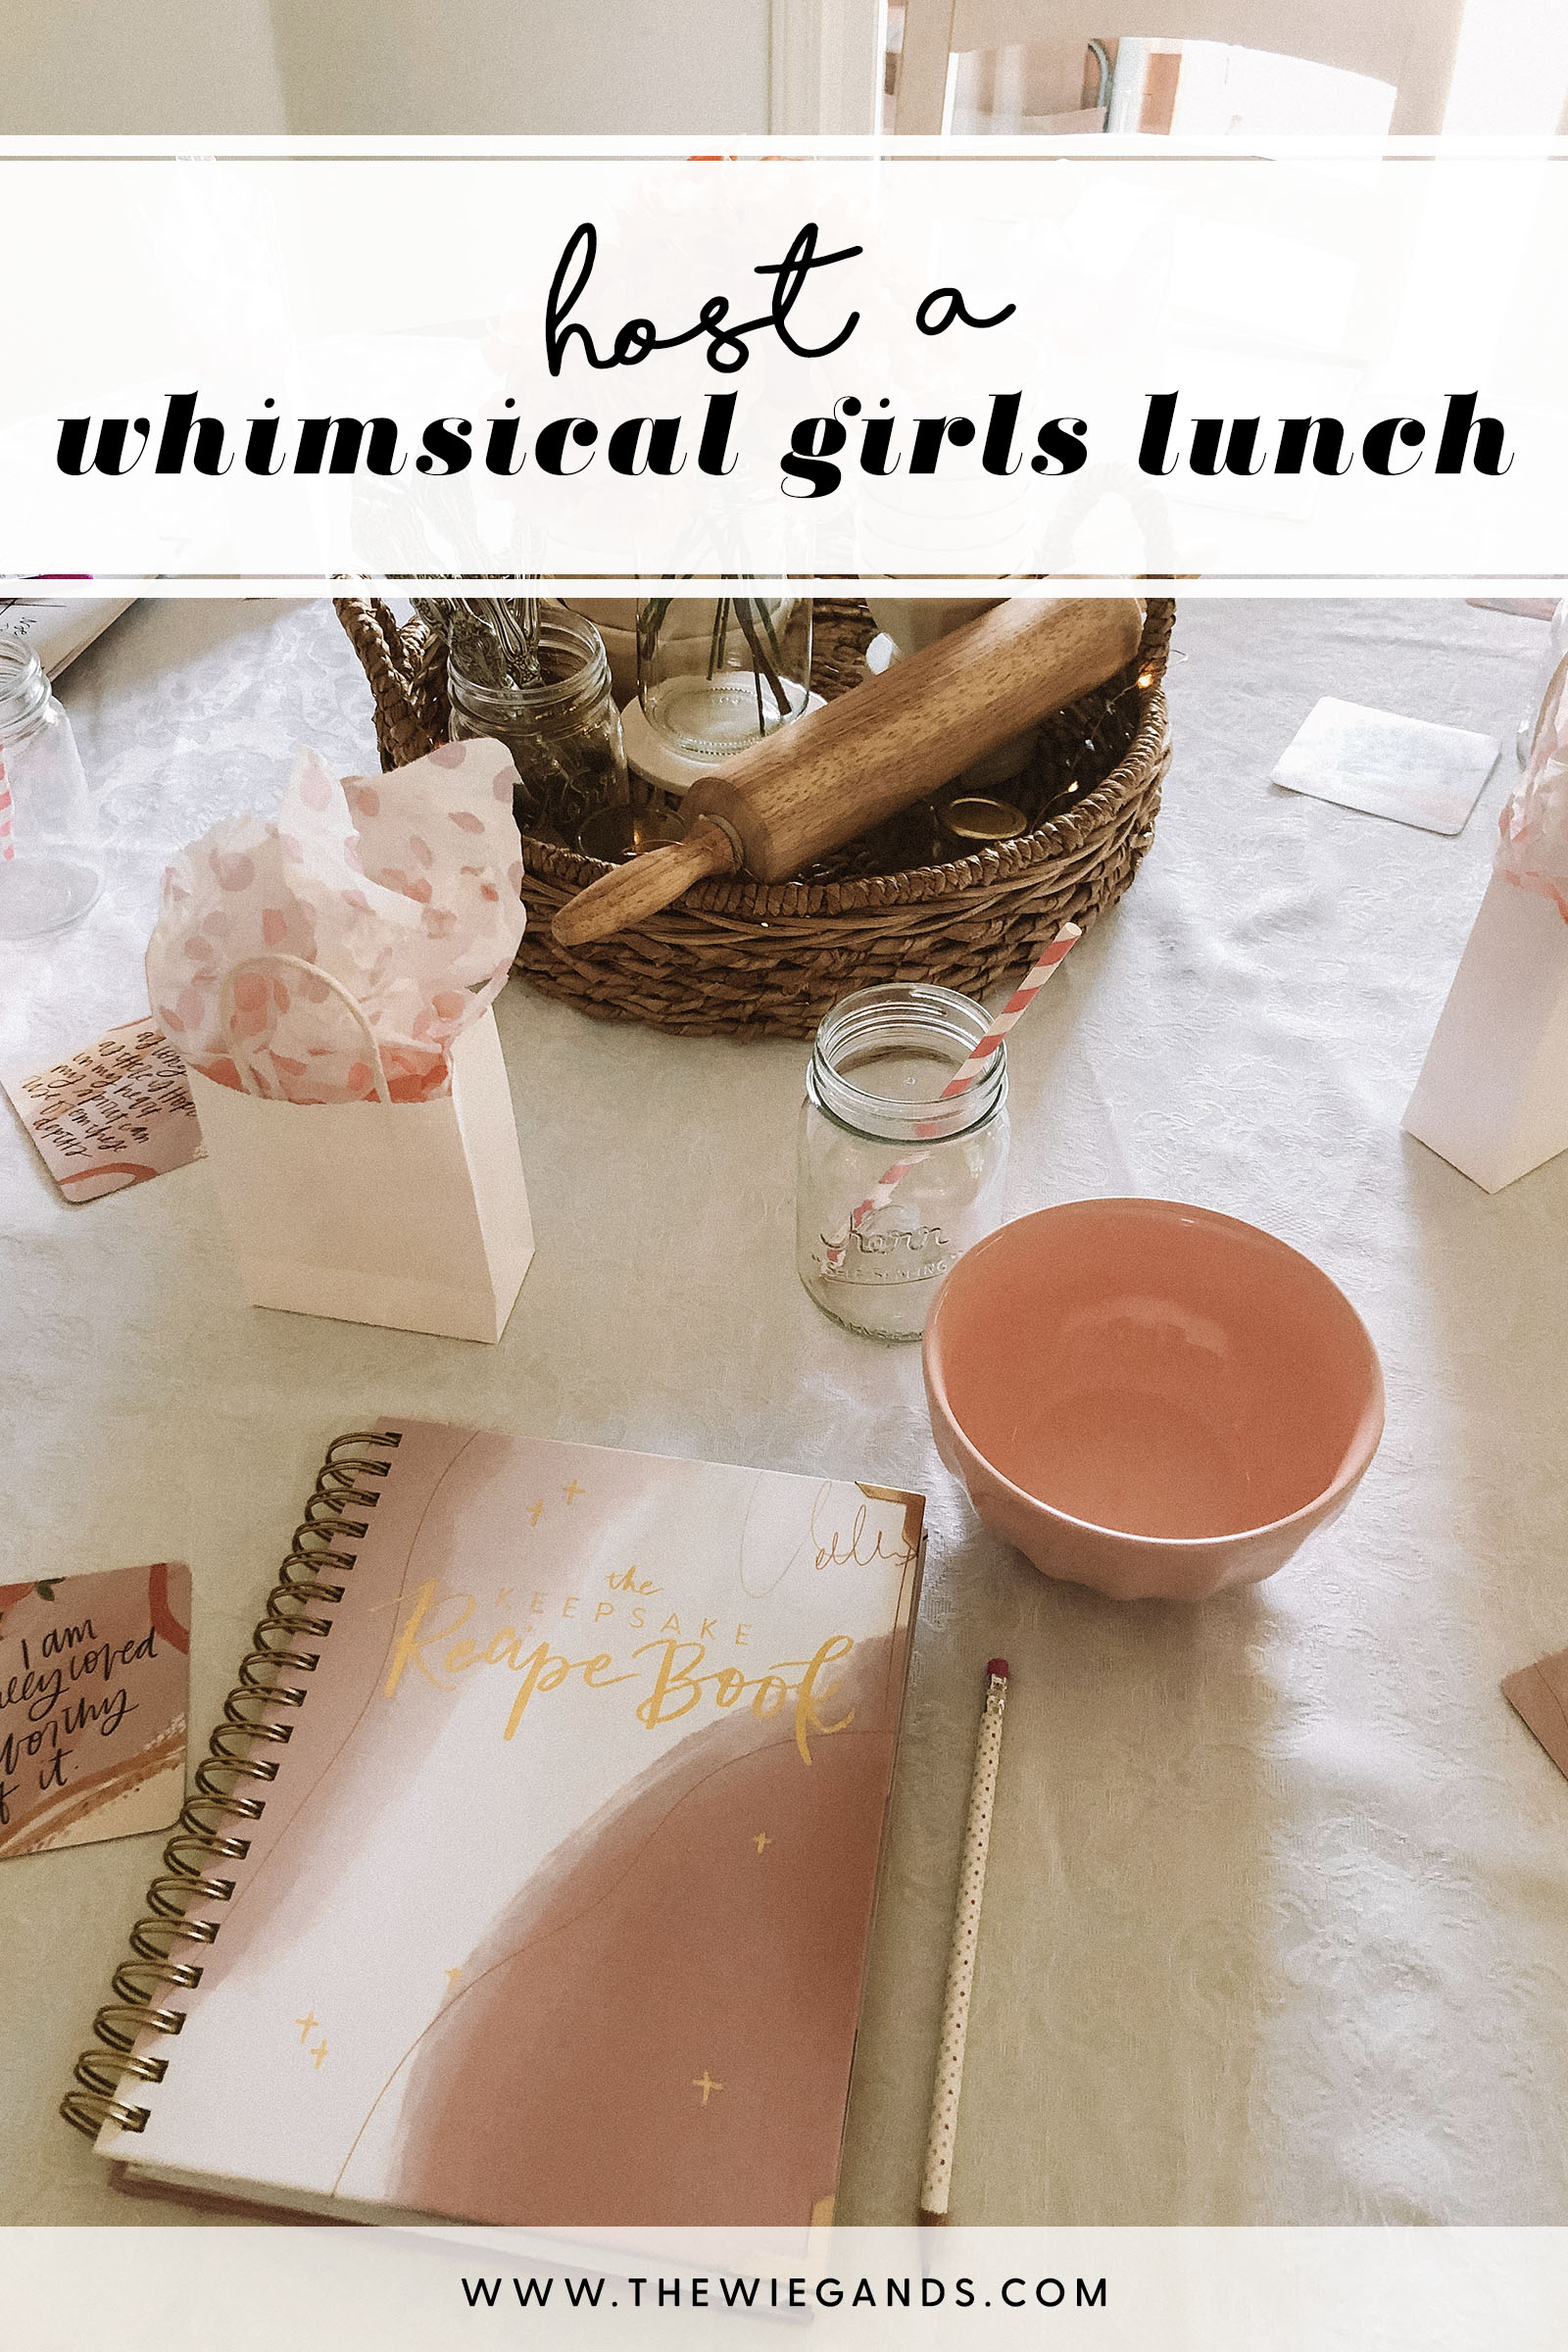 ladies lunch ideas